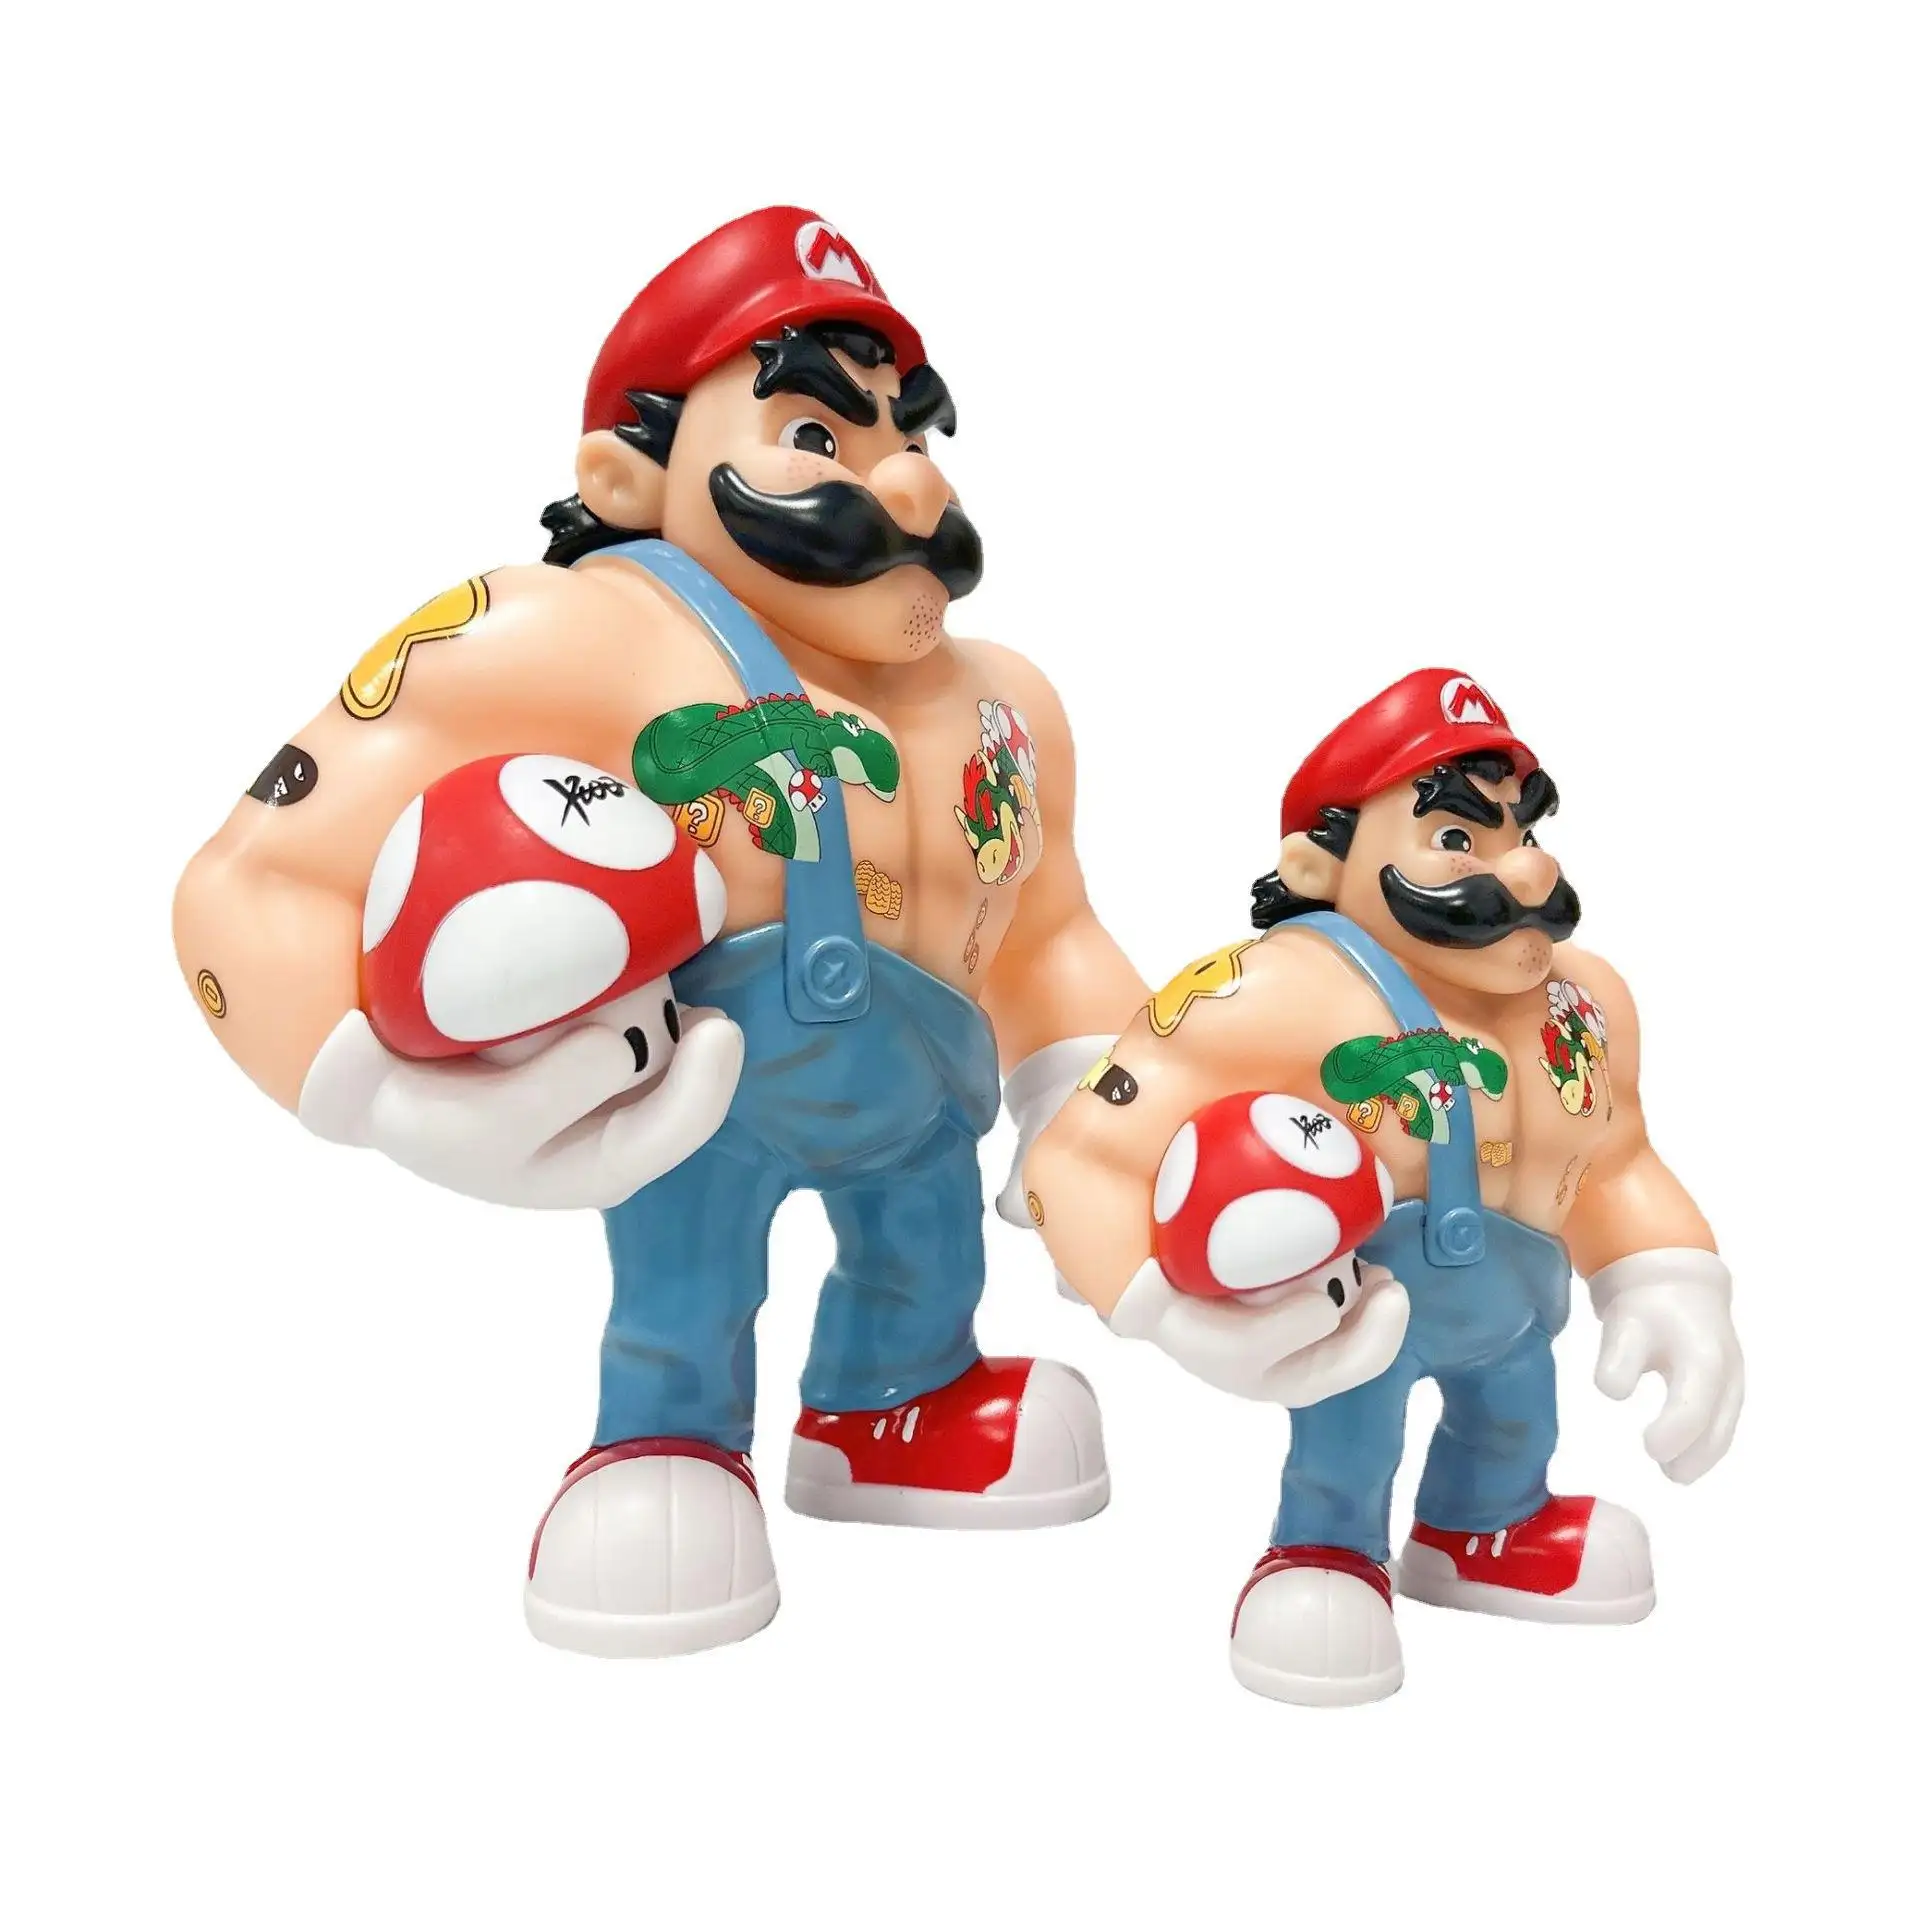 Super tamaño Mario Bros vinilo juguete, diferente dibujos animados videojuego vinilo figura juguete, coleccionable PC juego vinilo figura para venta al por mayor